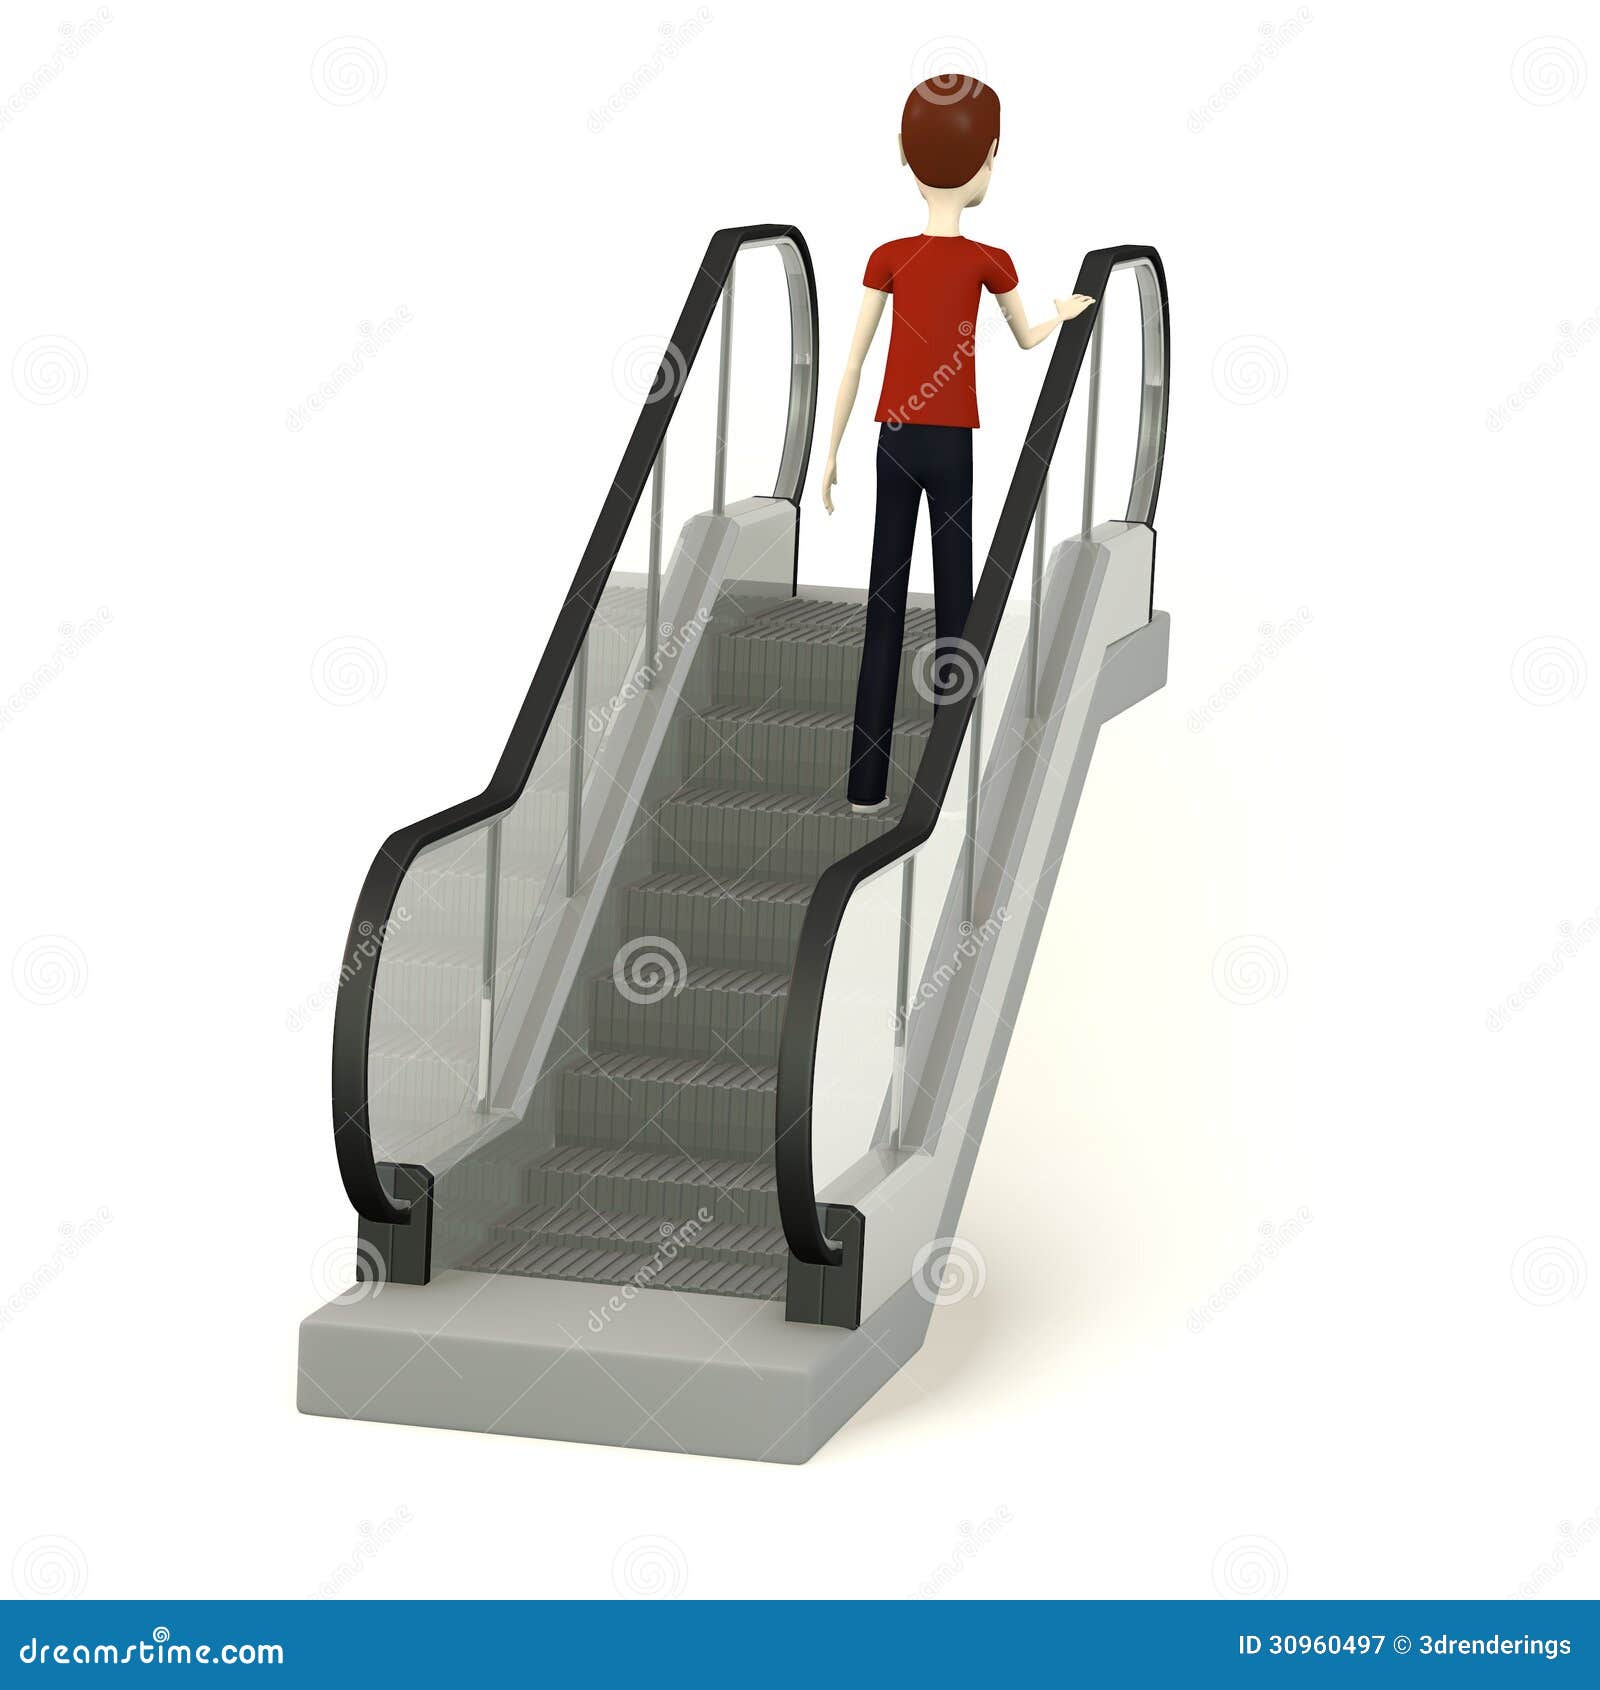 clipart escalator - photo #35